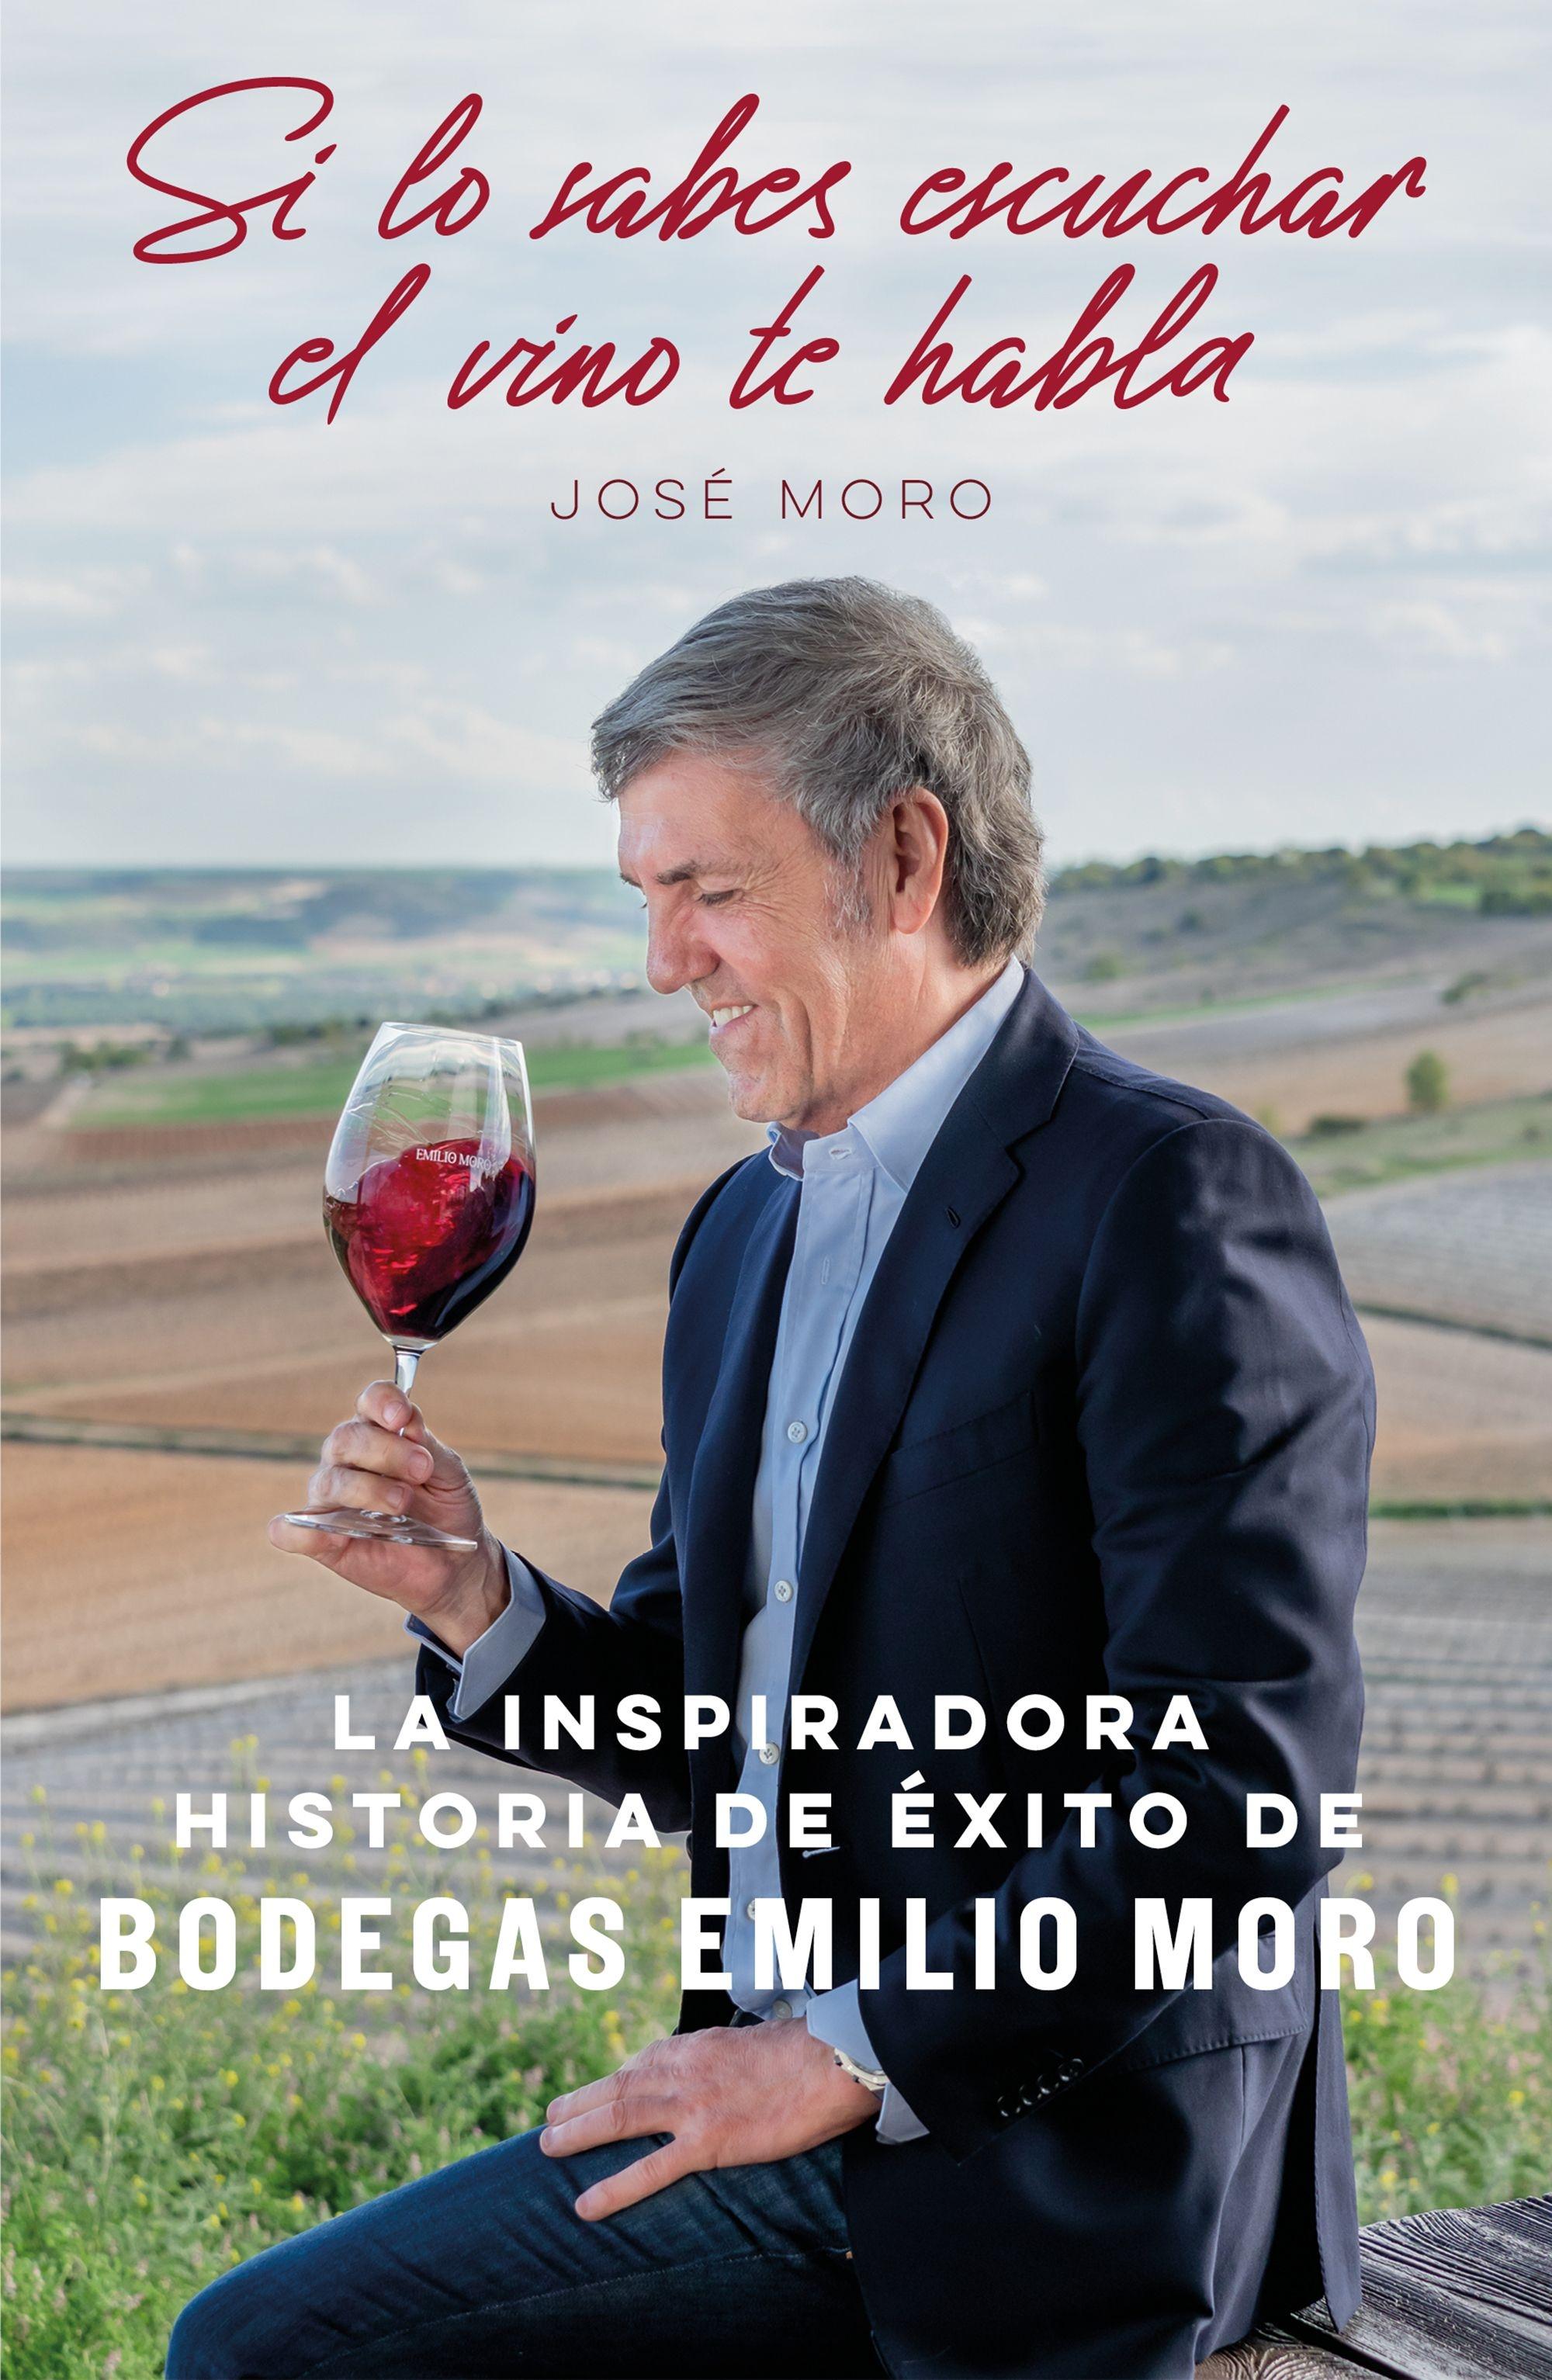 Si lo Sabes Escuchar, el Vino te Habla "La Inspiradora Historia de Éxito de Bodegas Emilio Moro"